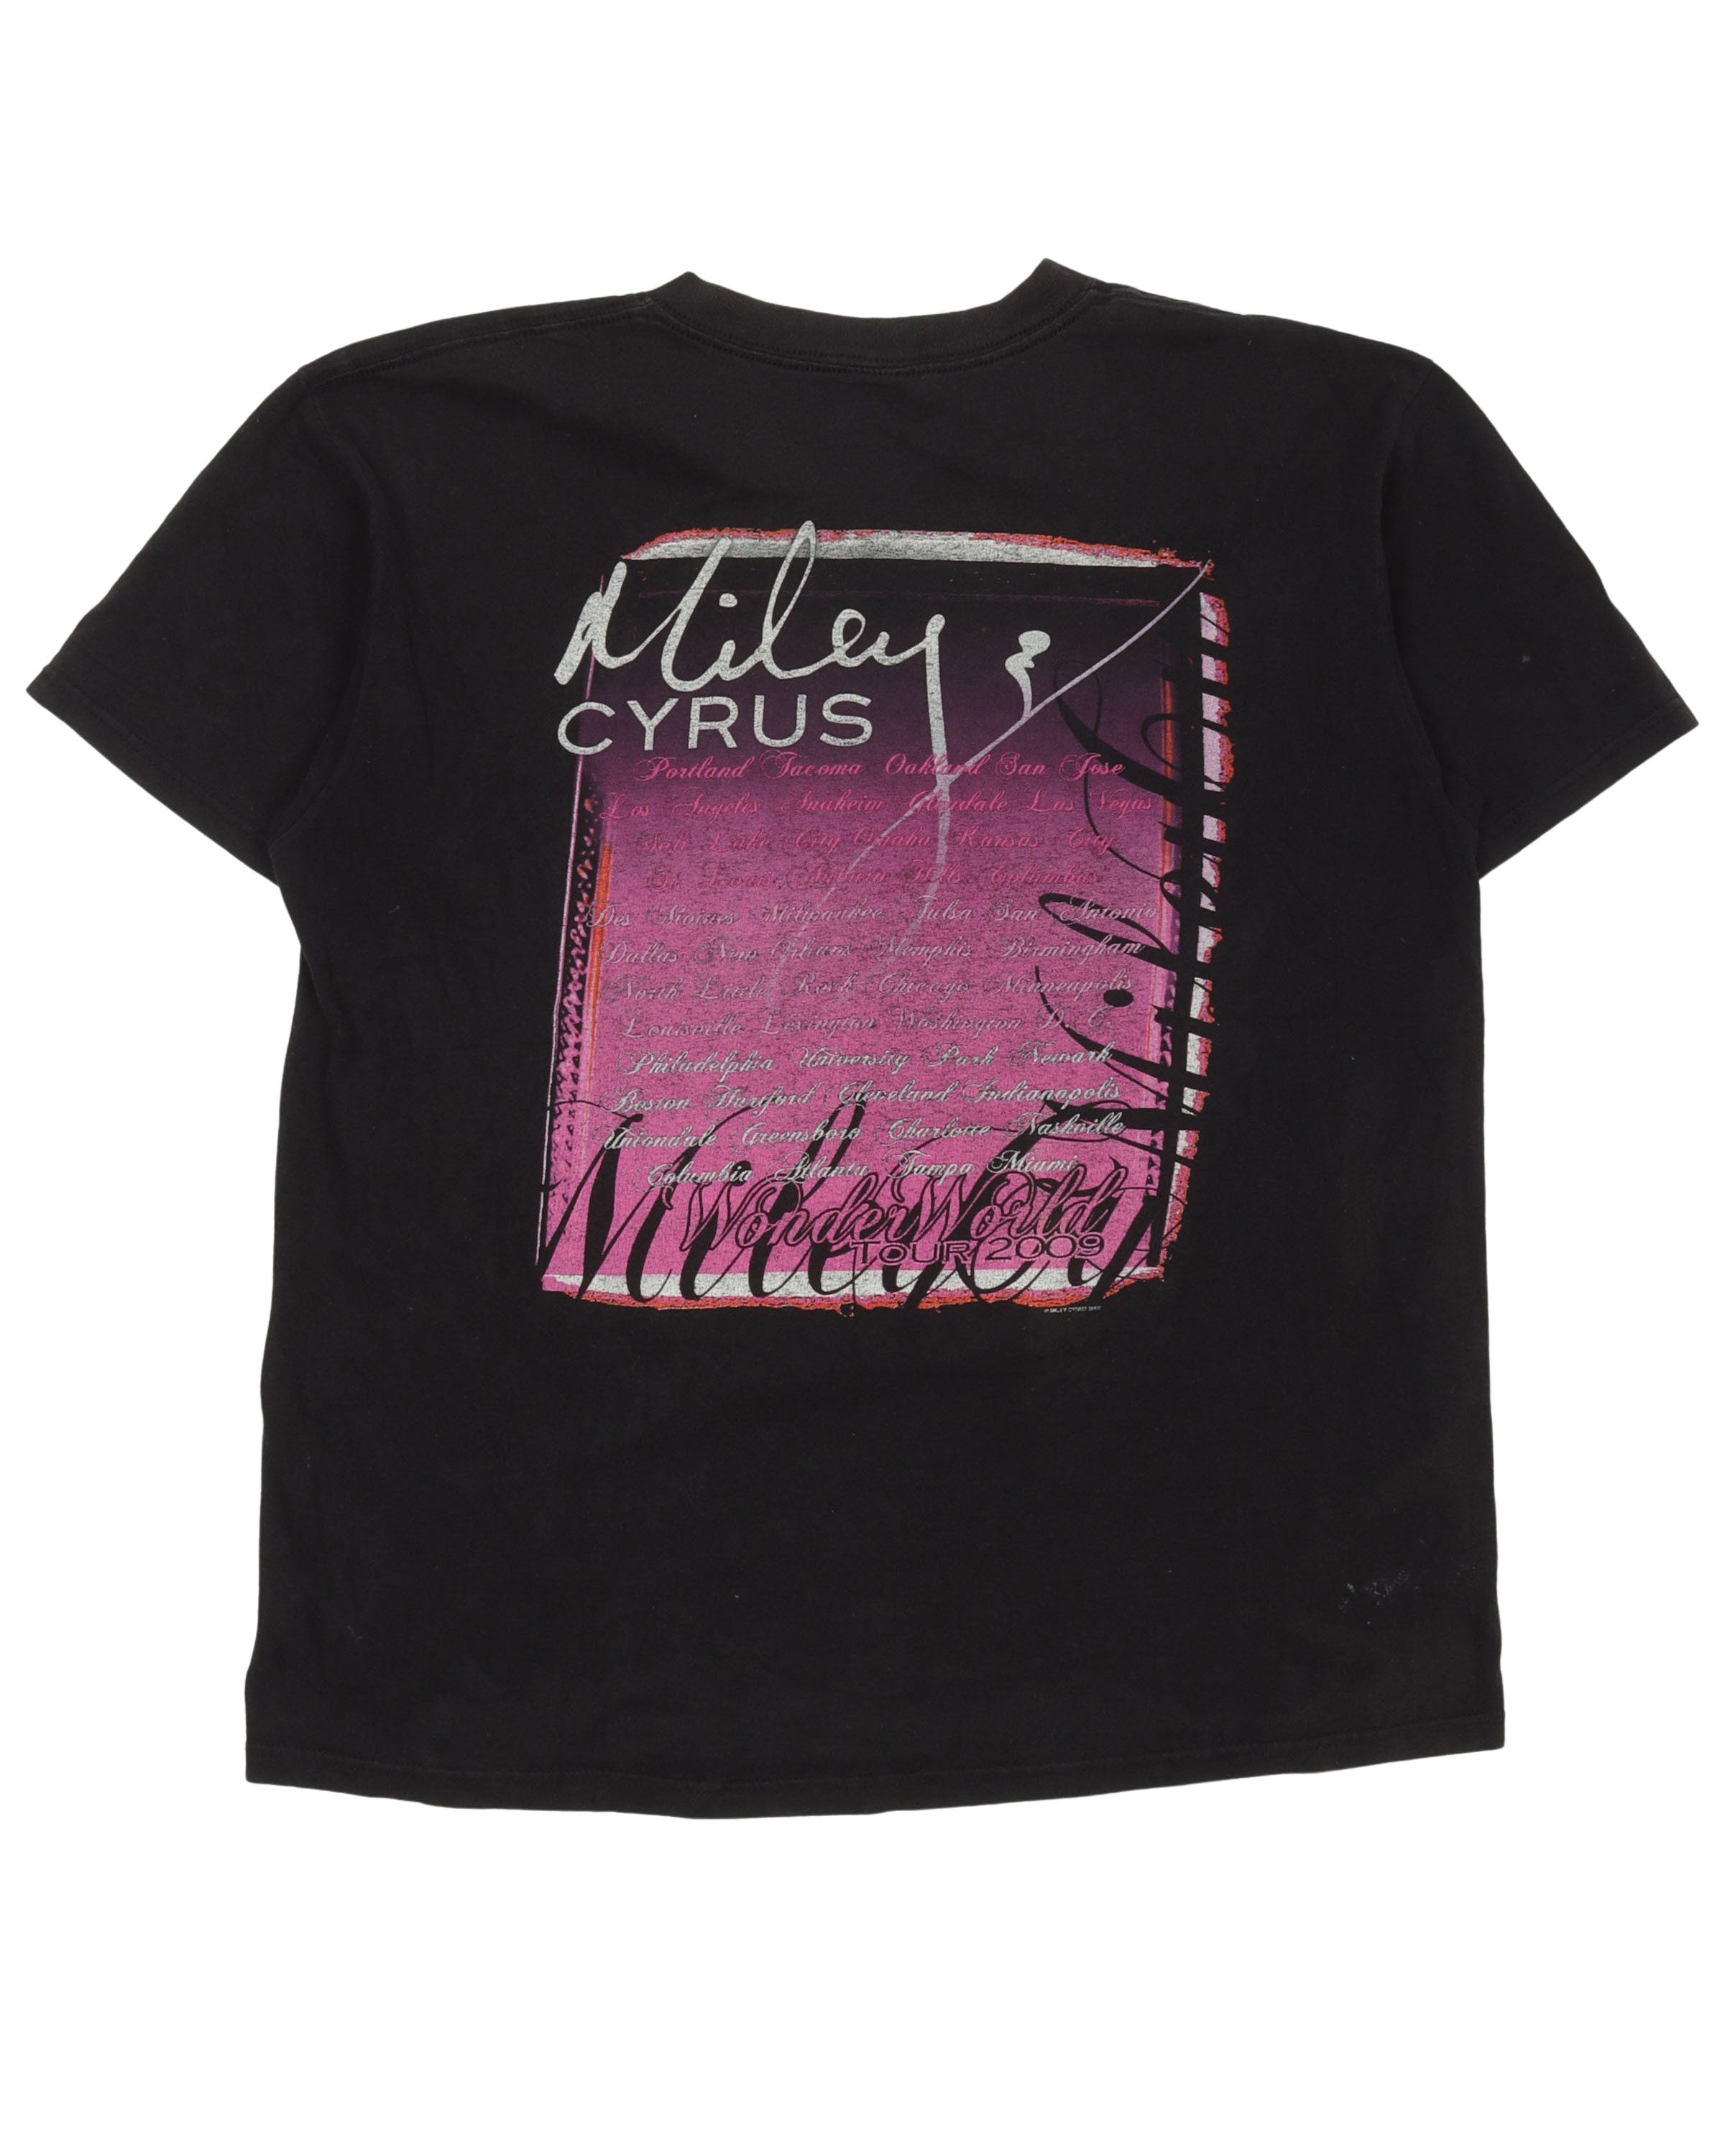 Miley Cyrus T-Shirt